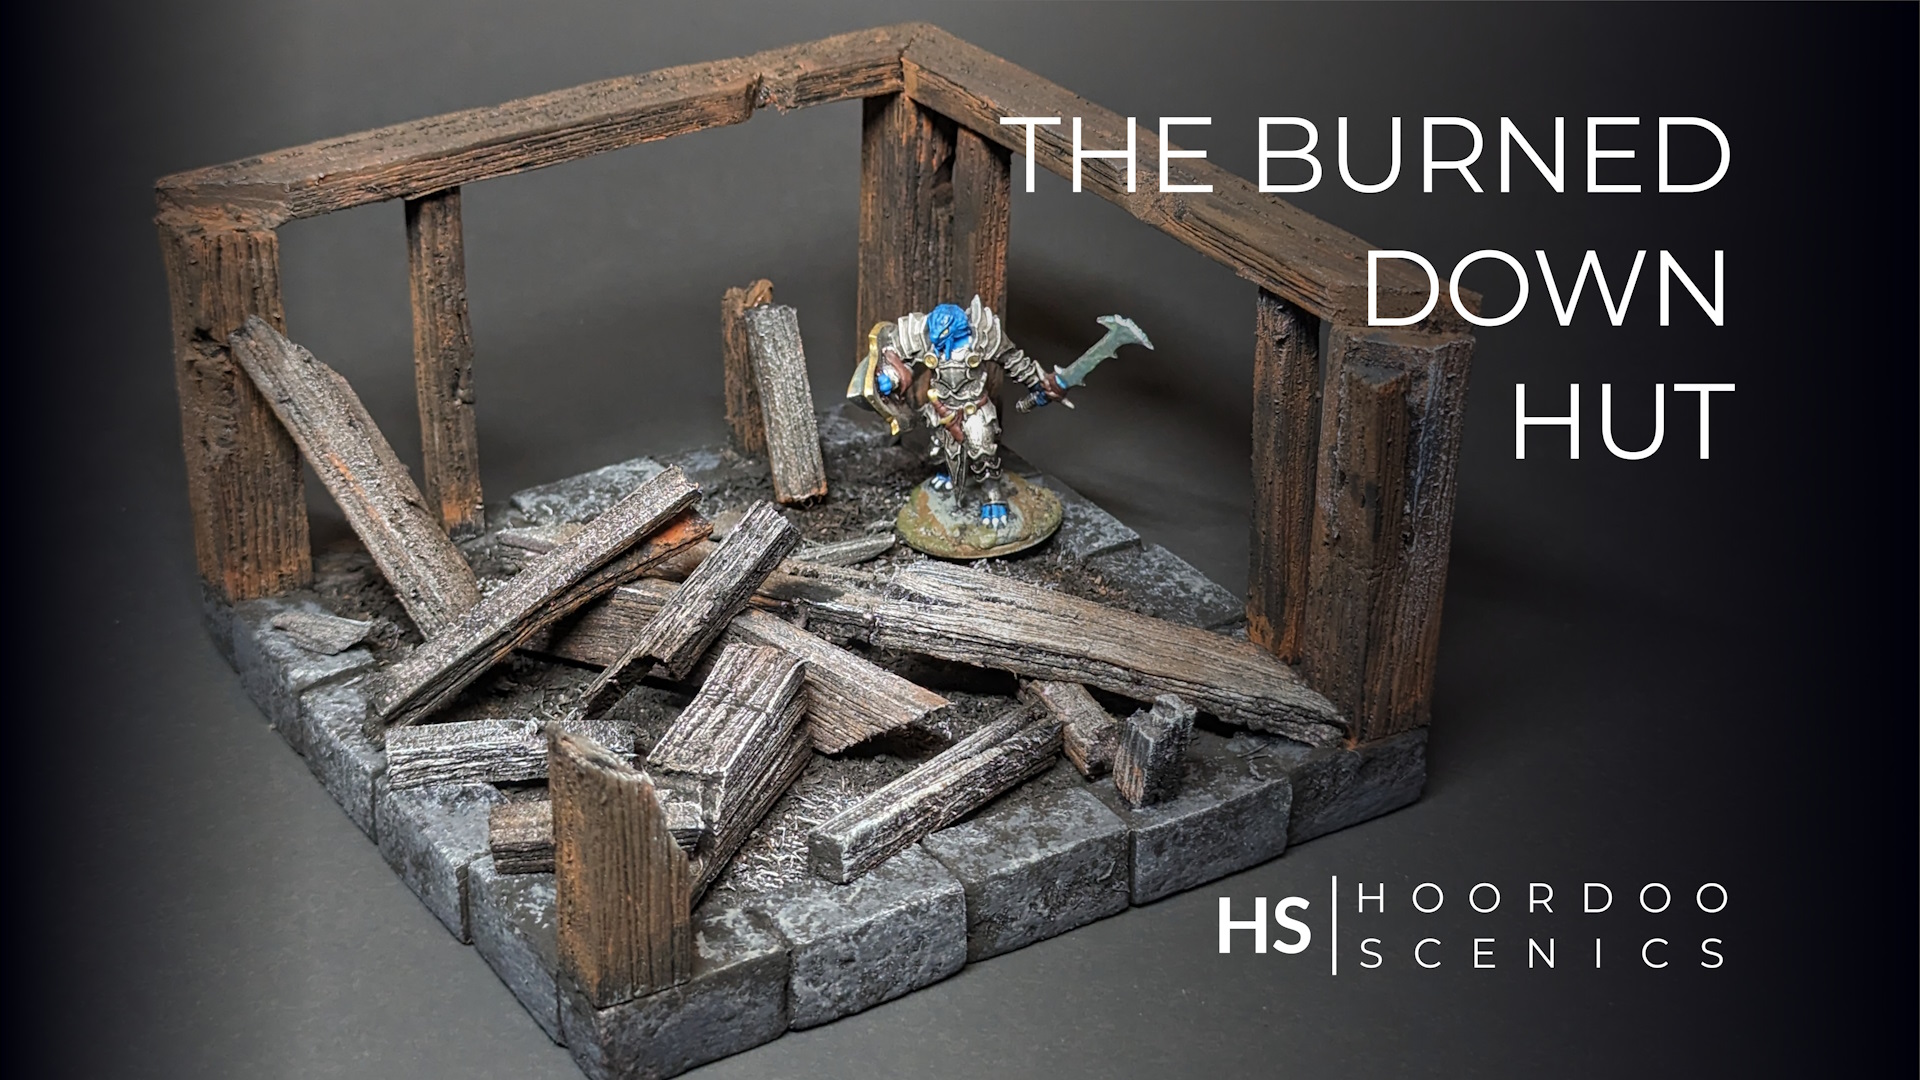 The Burned Down Hut